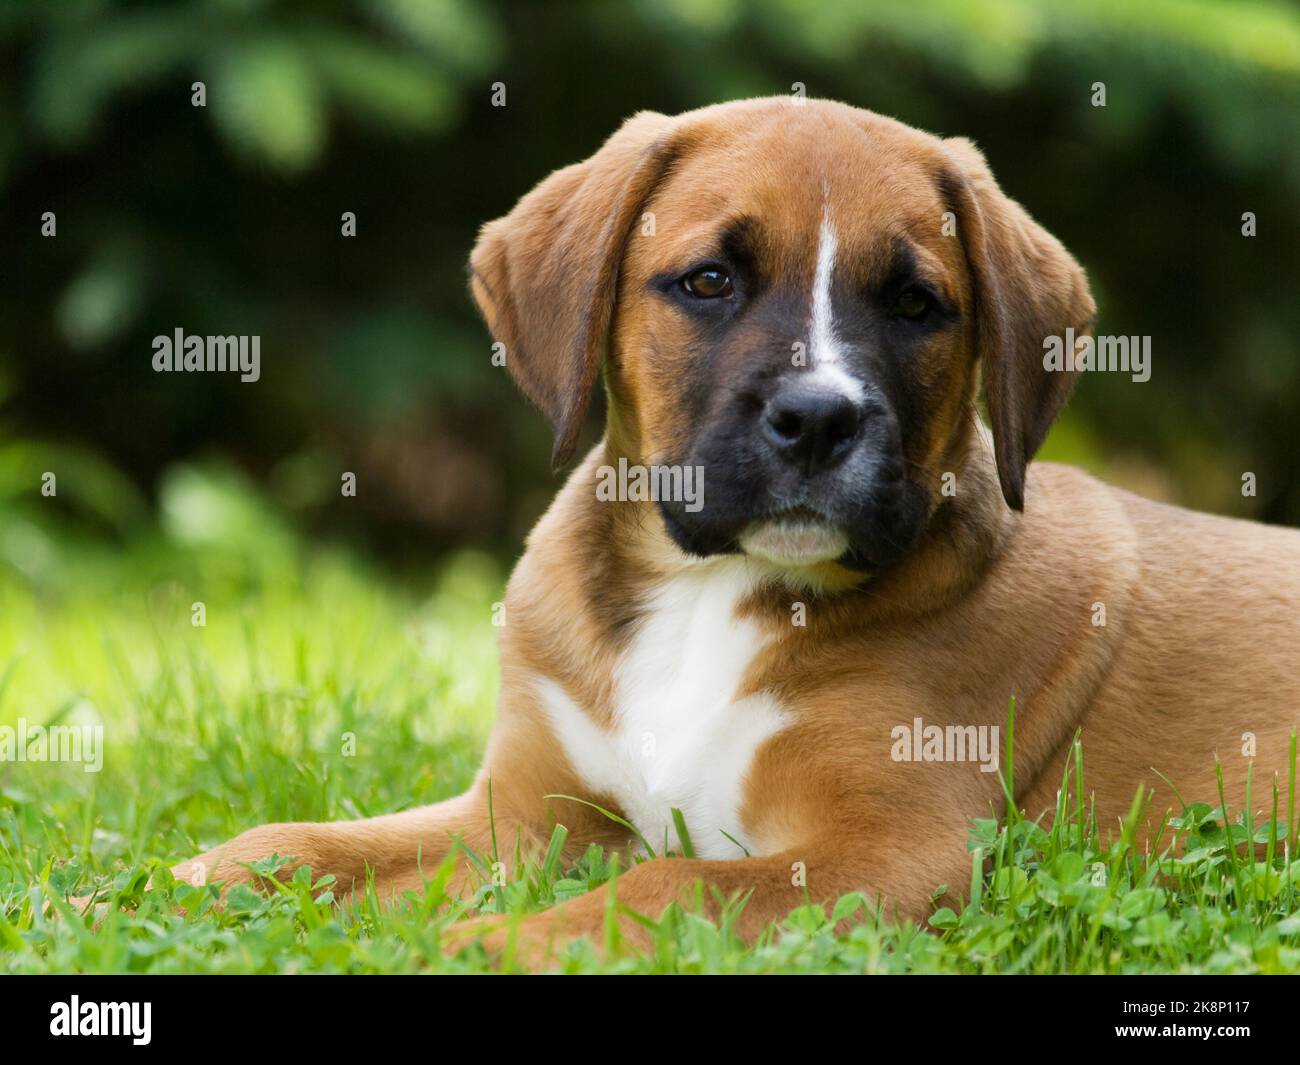 Cute lying crossbread dog puppy Stock Photo